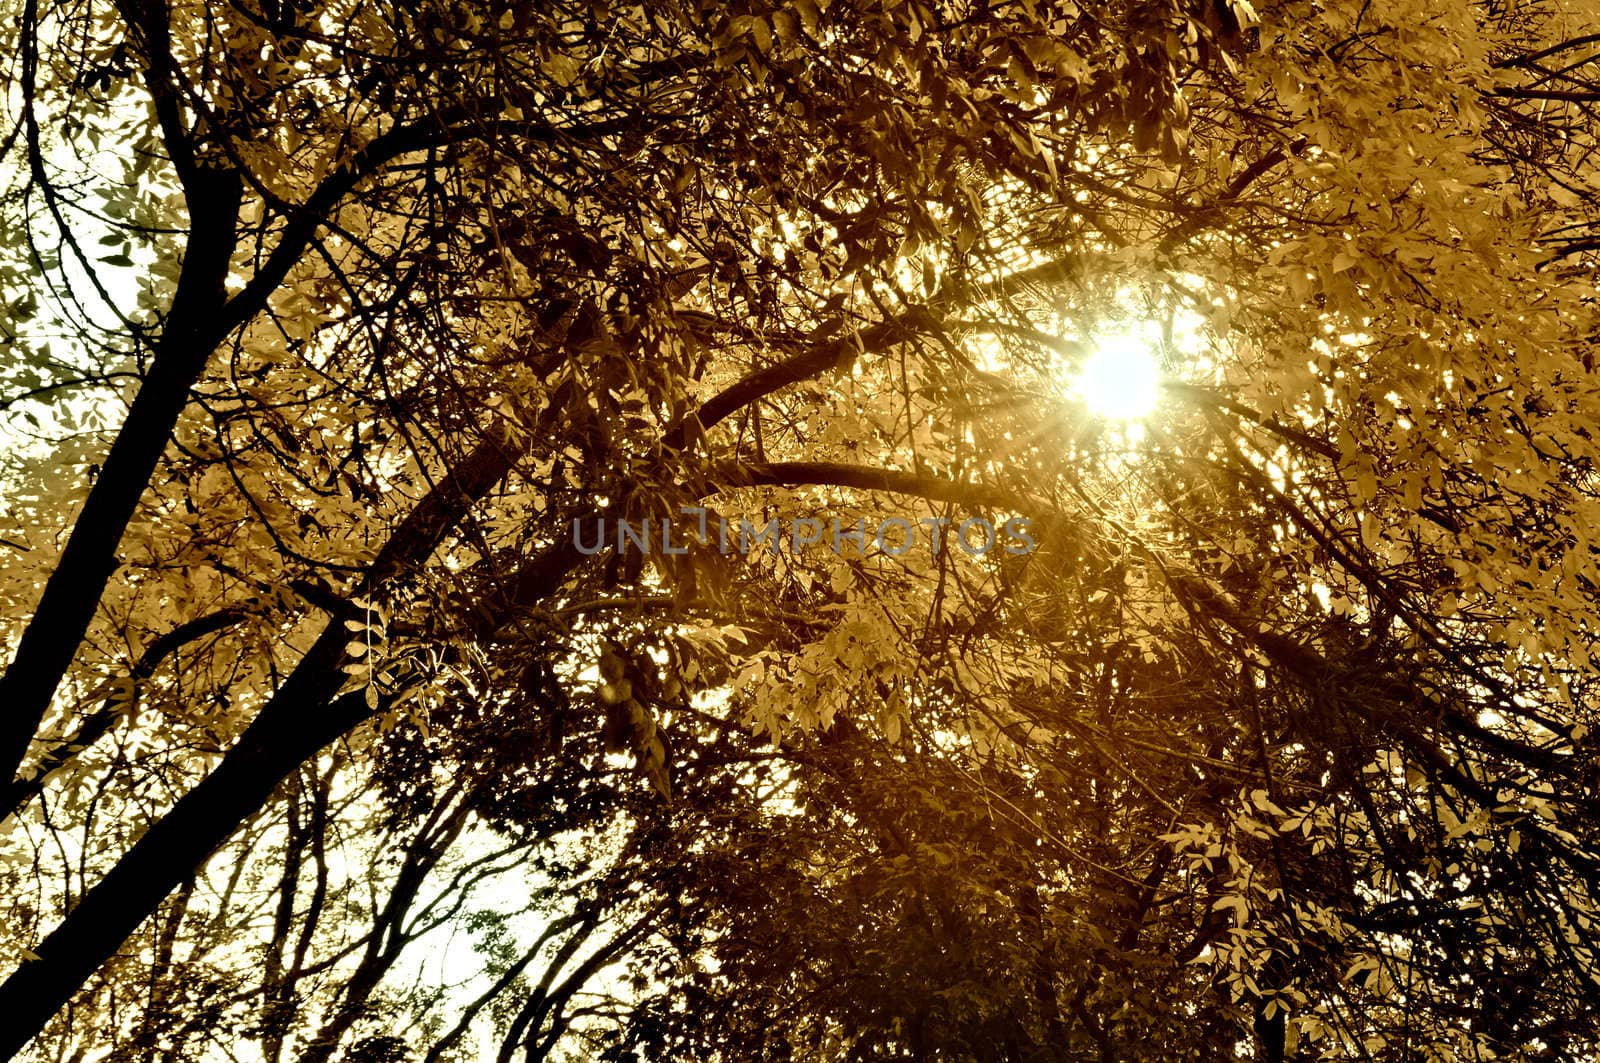 Solar beams through trees in September by alena0509